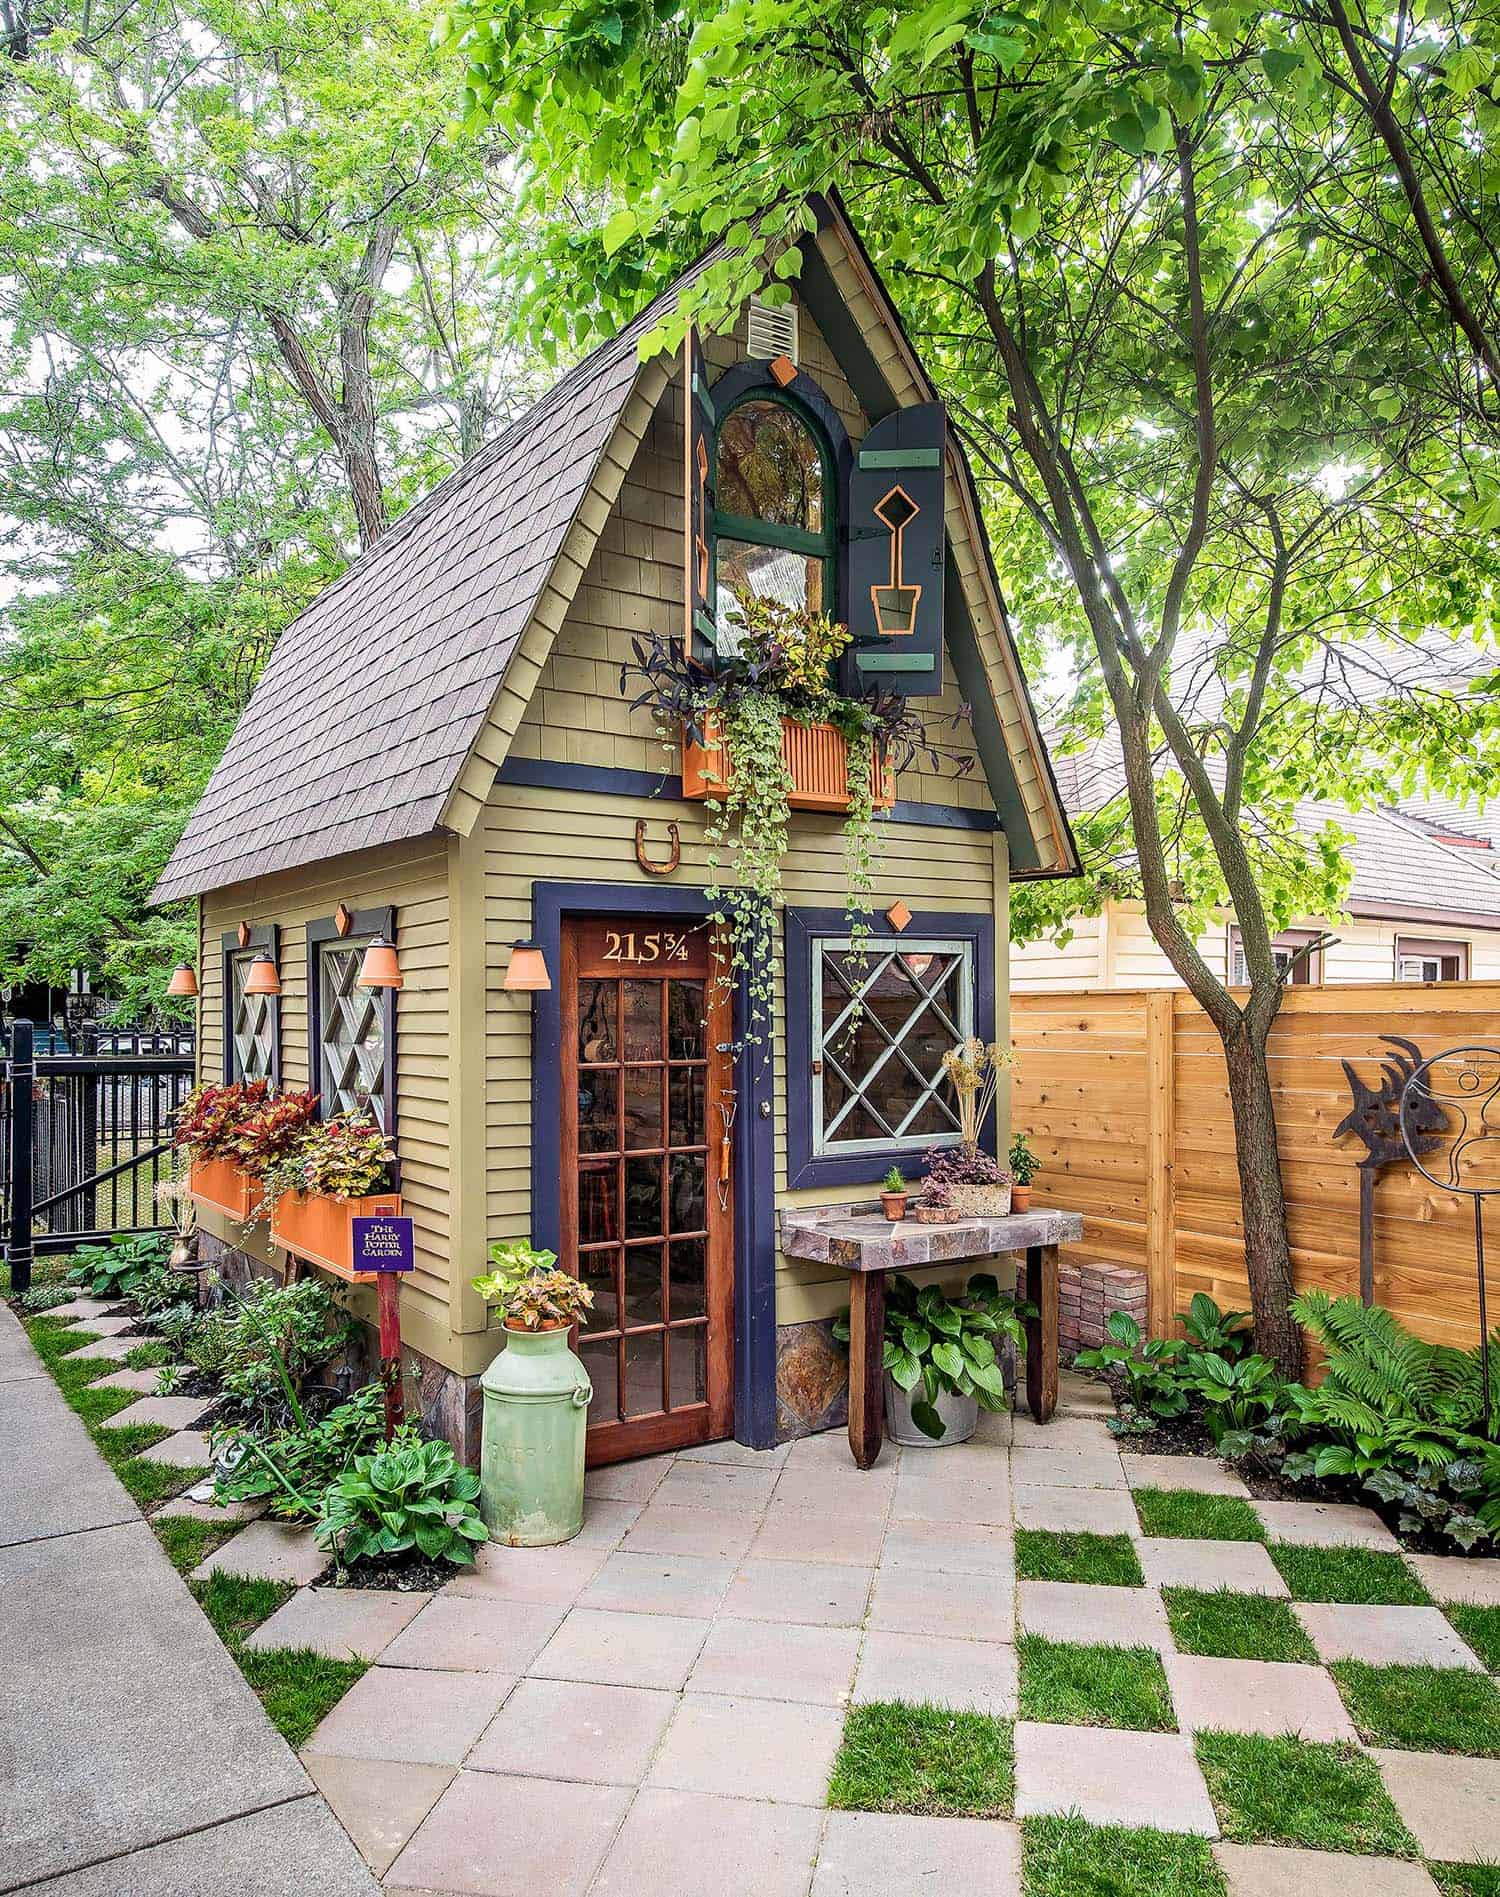 charming-garden-potting-shed